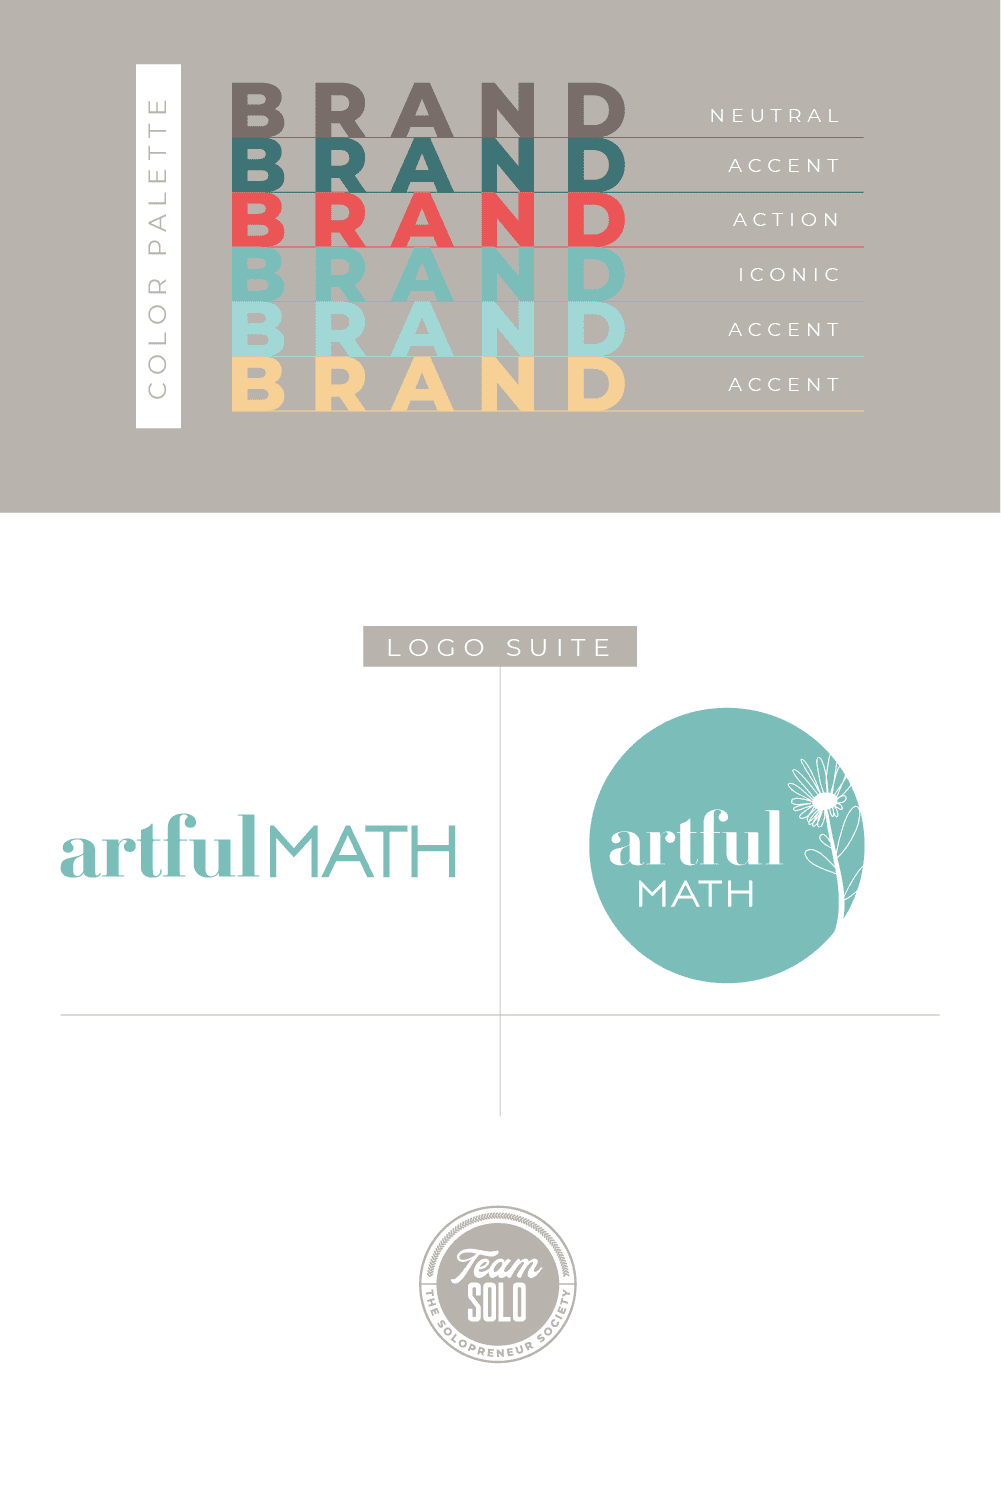 Artful Math Brand Identity Design